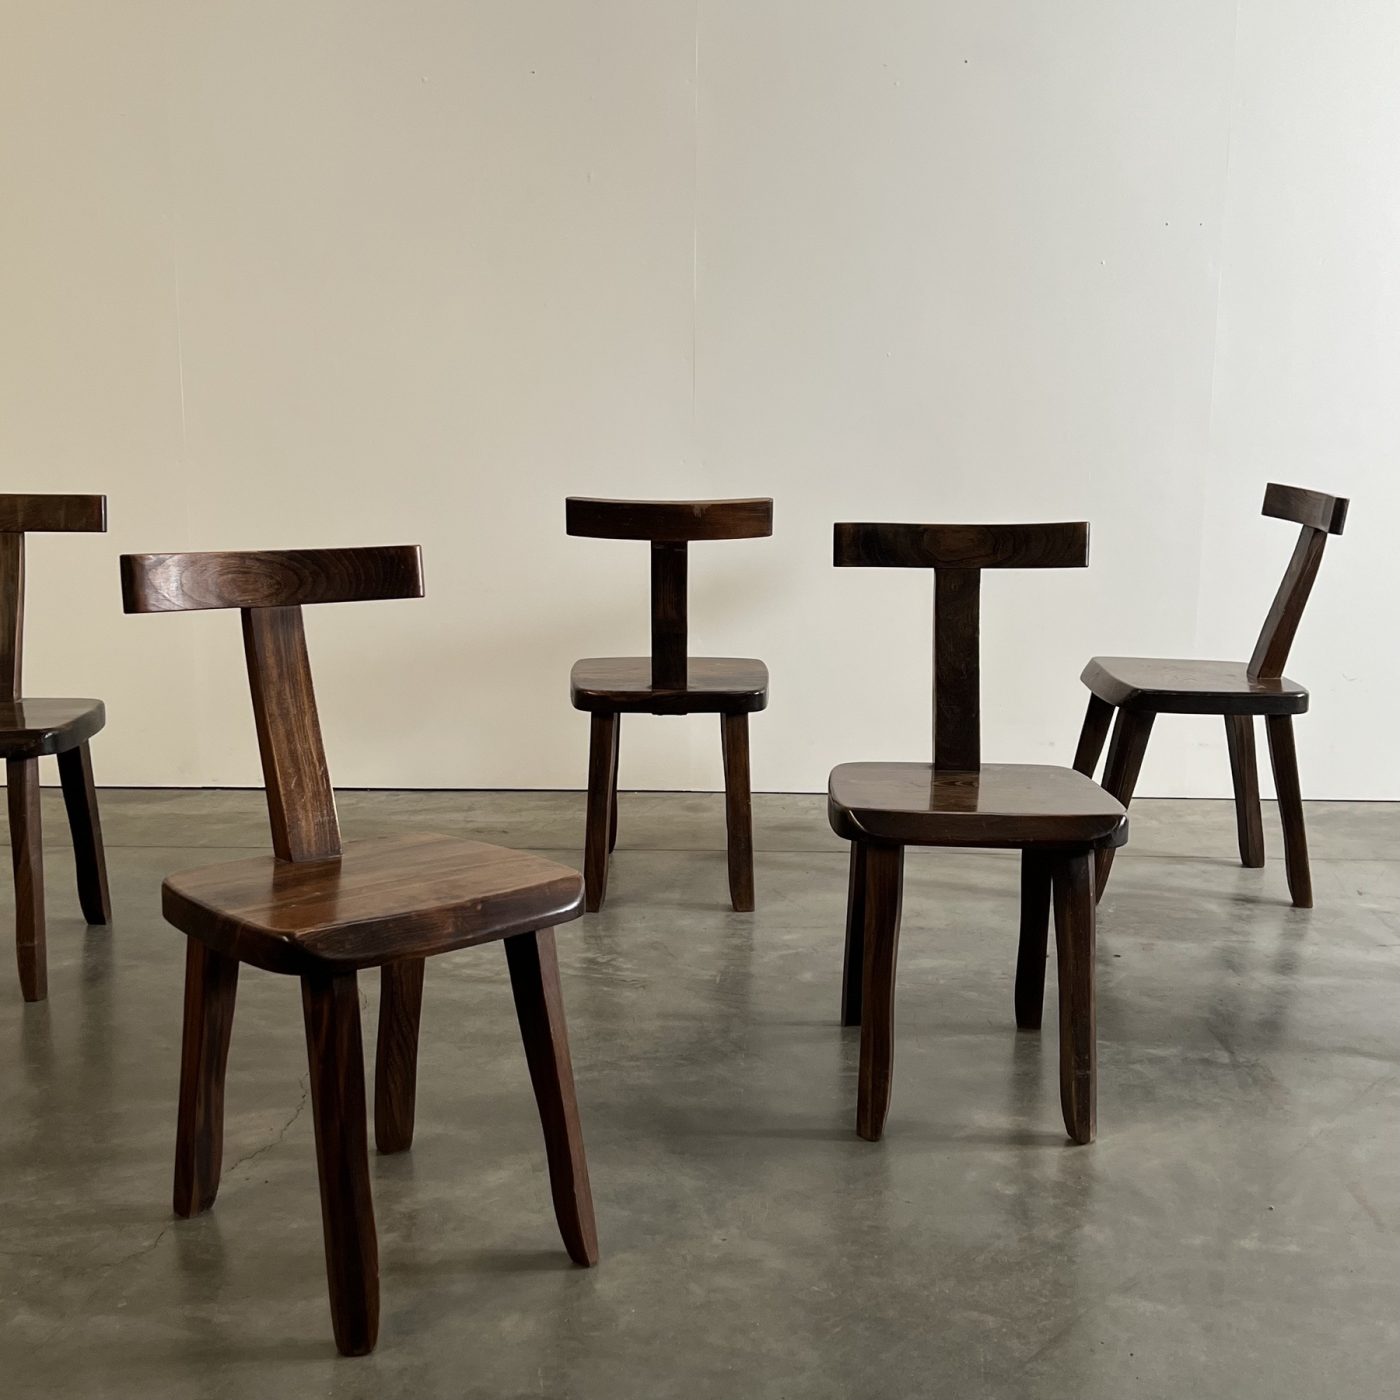 objet-hanninen-chairs0004